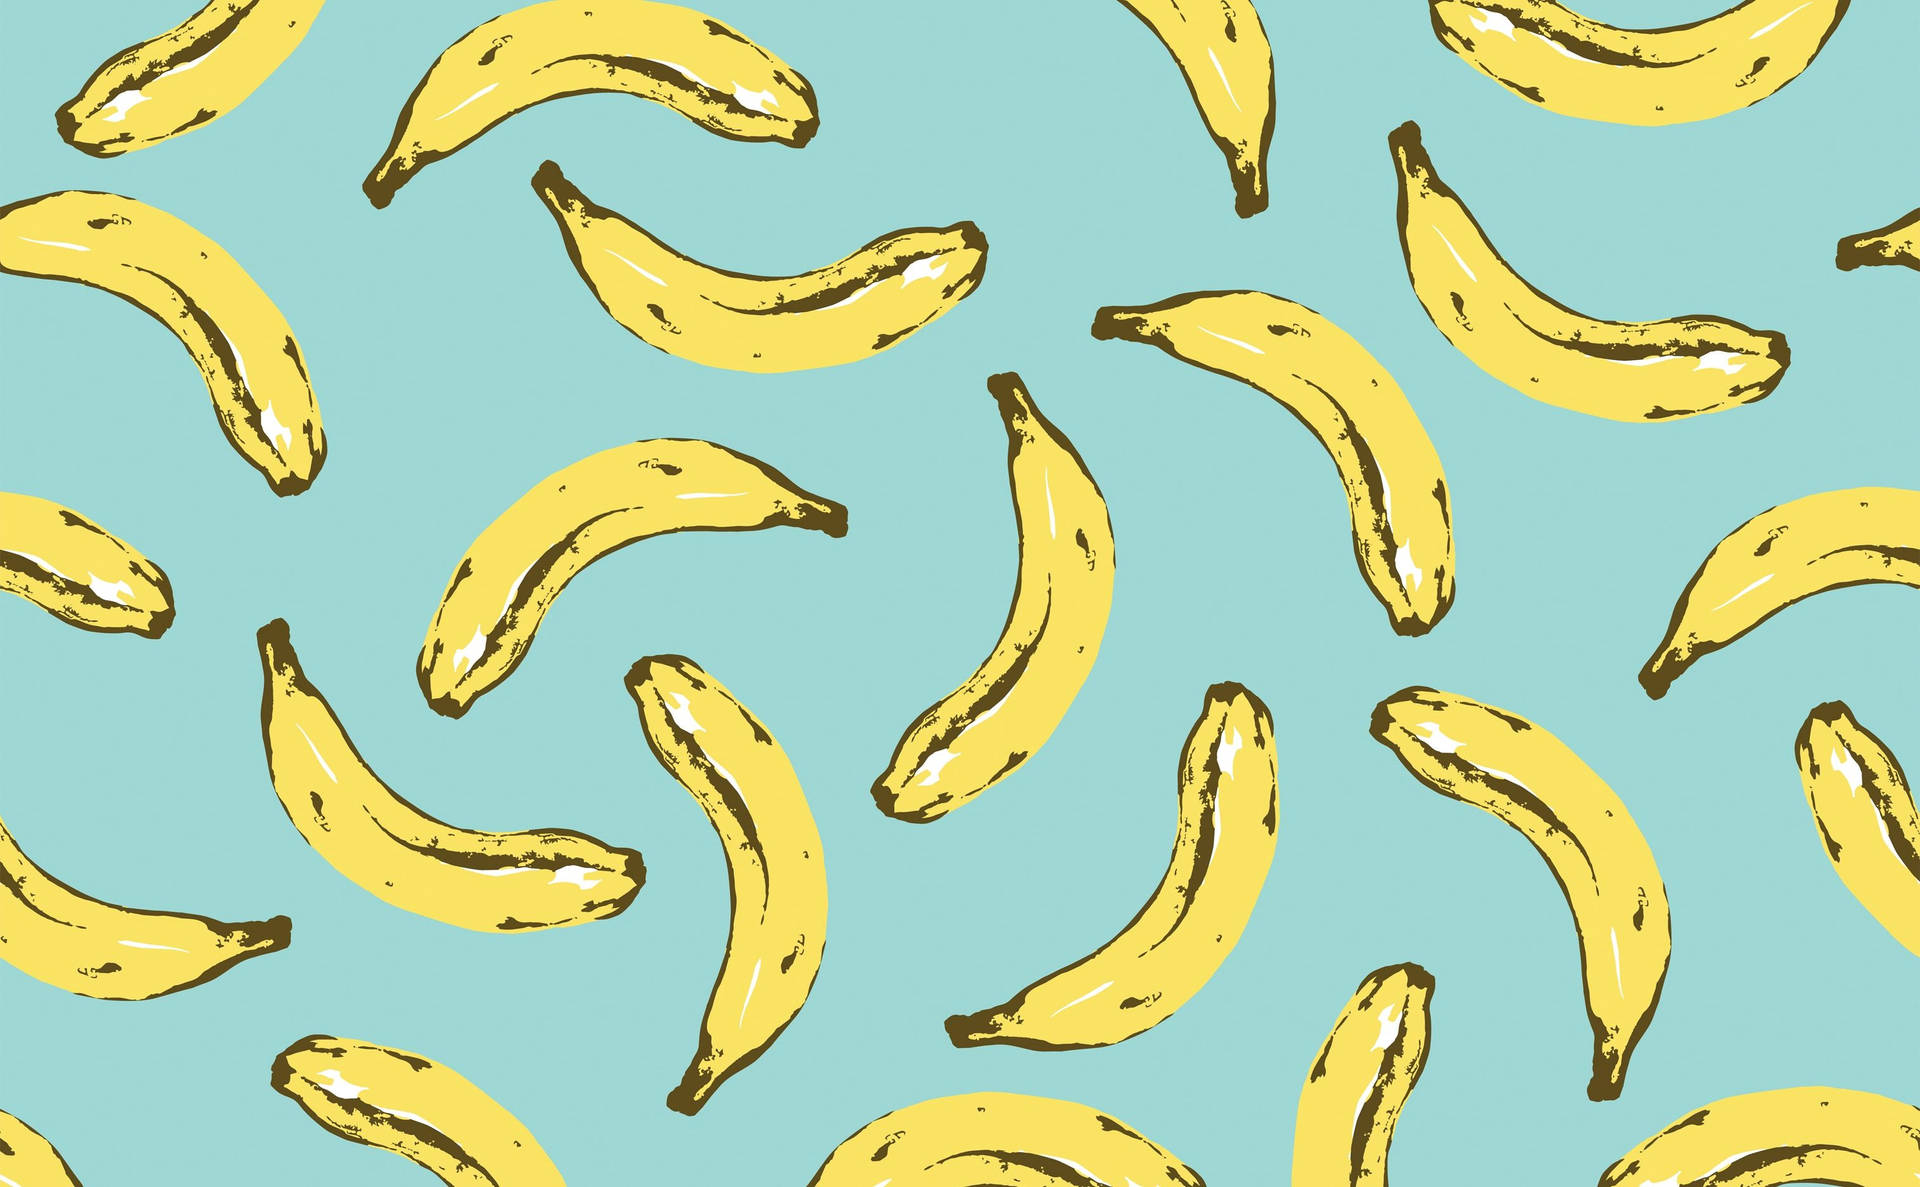 Banana 3028X1872 Wallpaper and Background Image